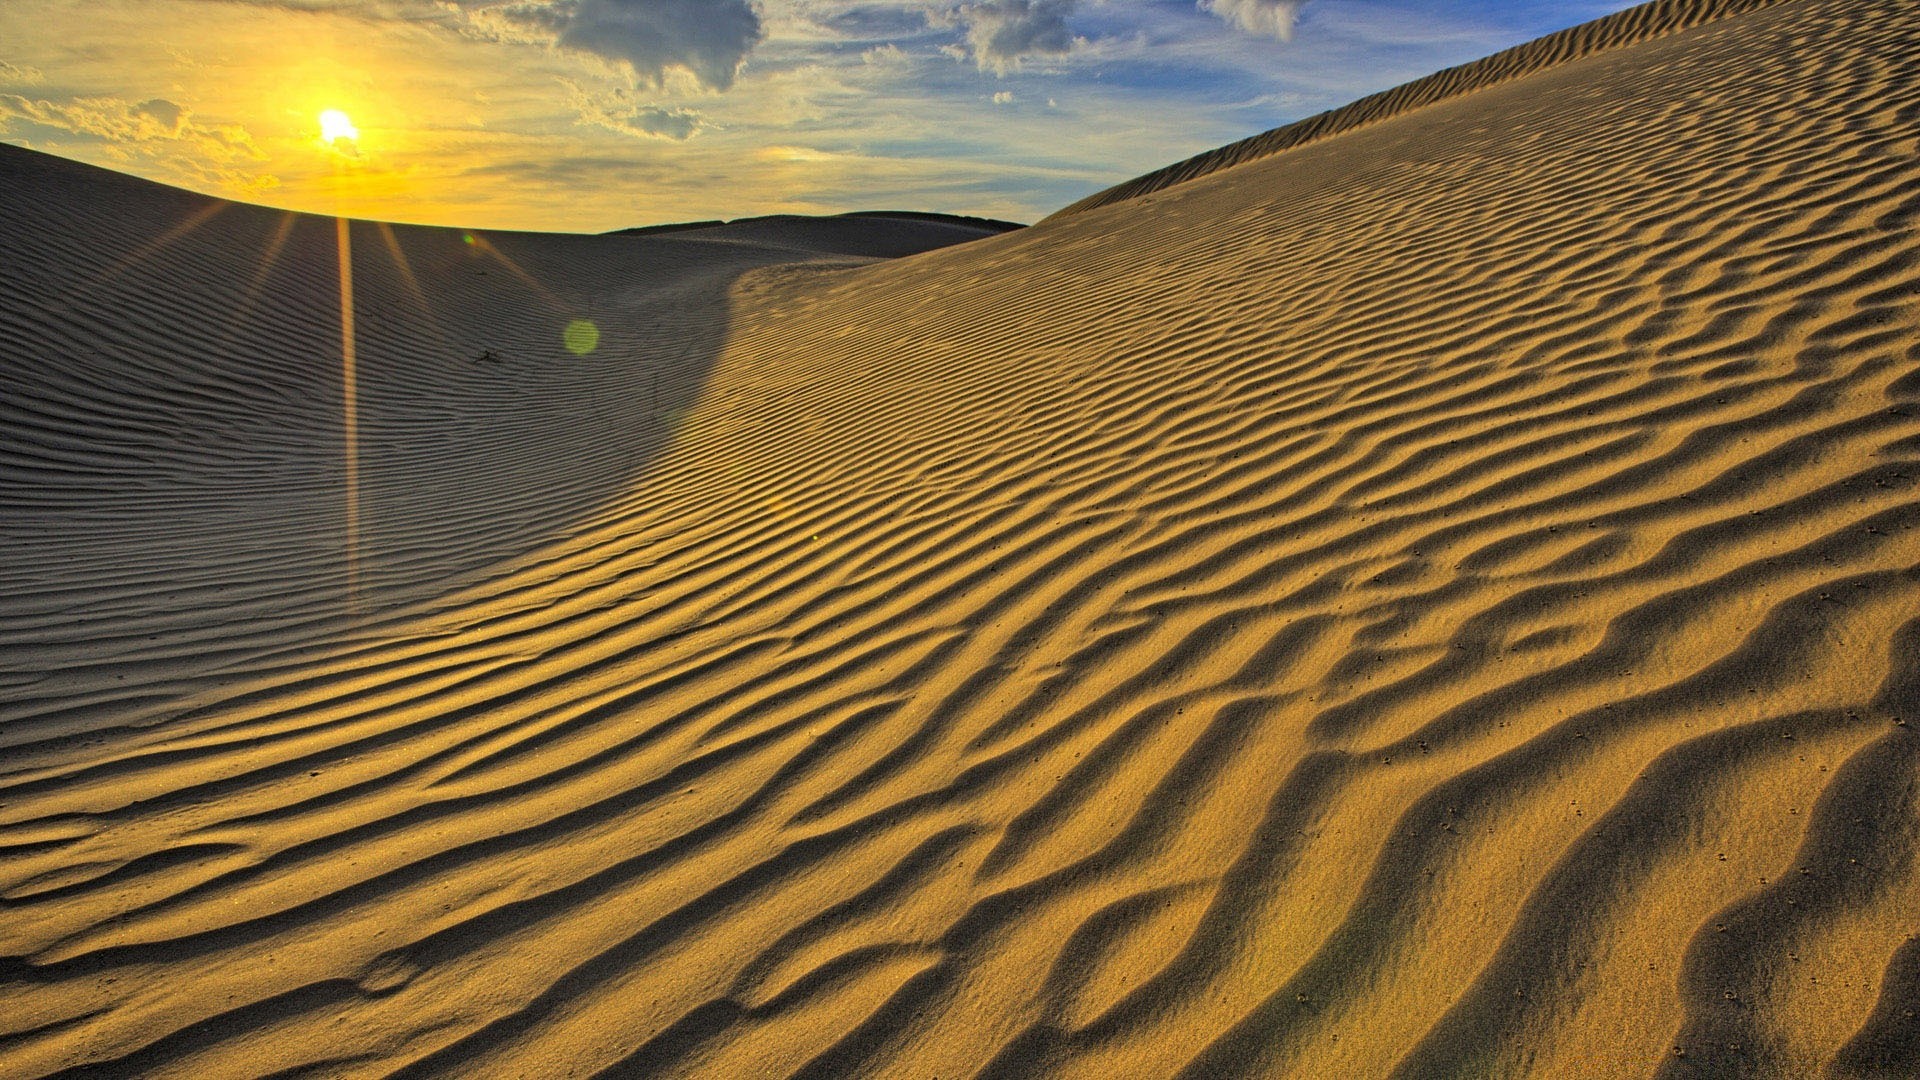 desert sand dune barren arid dry hot adventure travel alone beach landscape shadow heat nature sun drought dawn